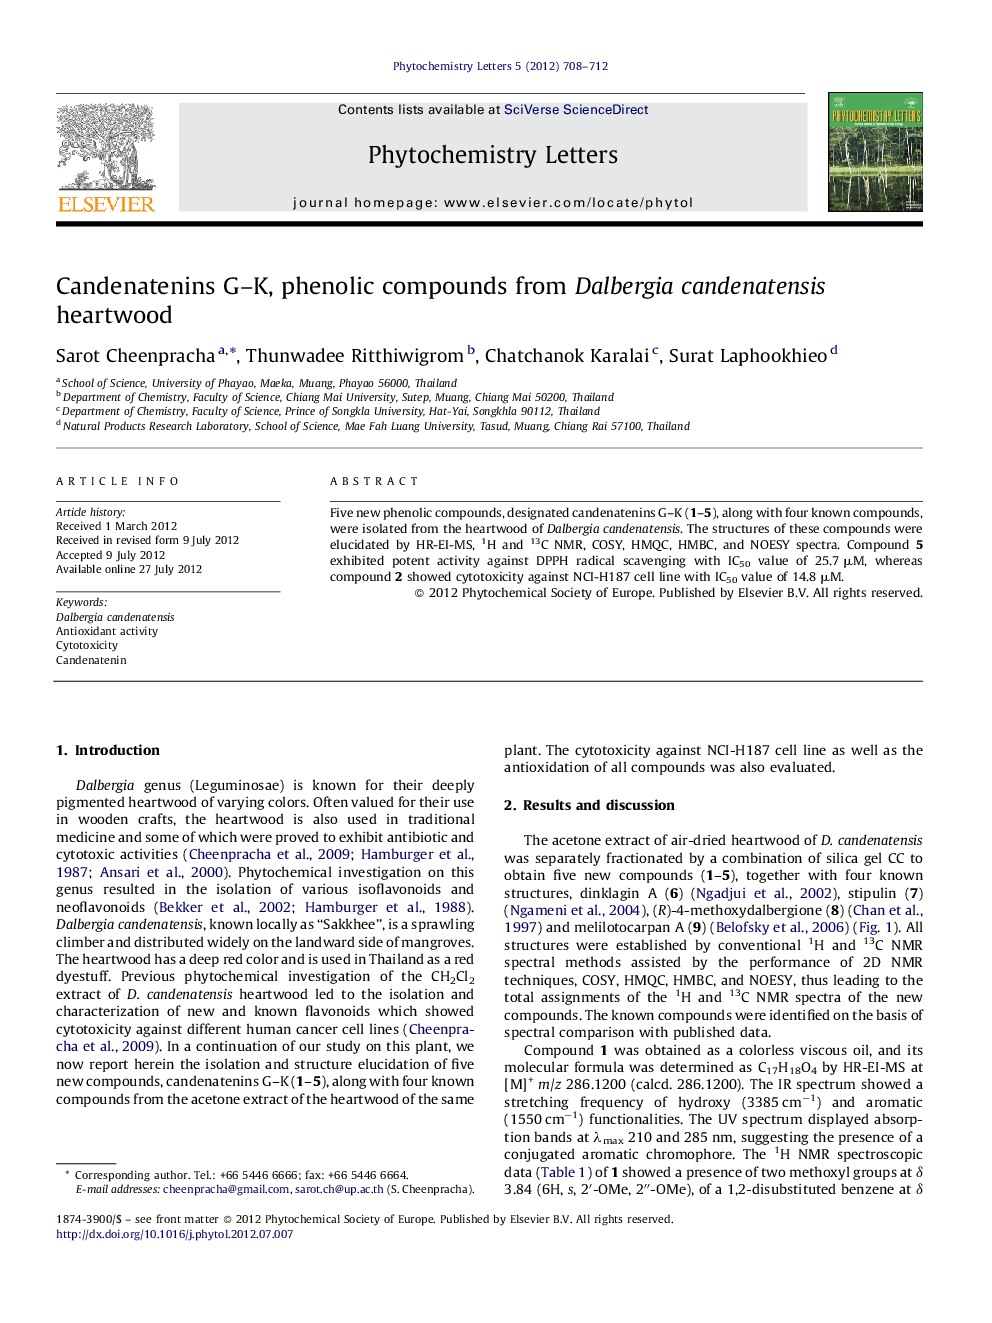 Candenatenins G-K, phenolic compounds from Dalbergia candenatensis heartwood